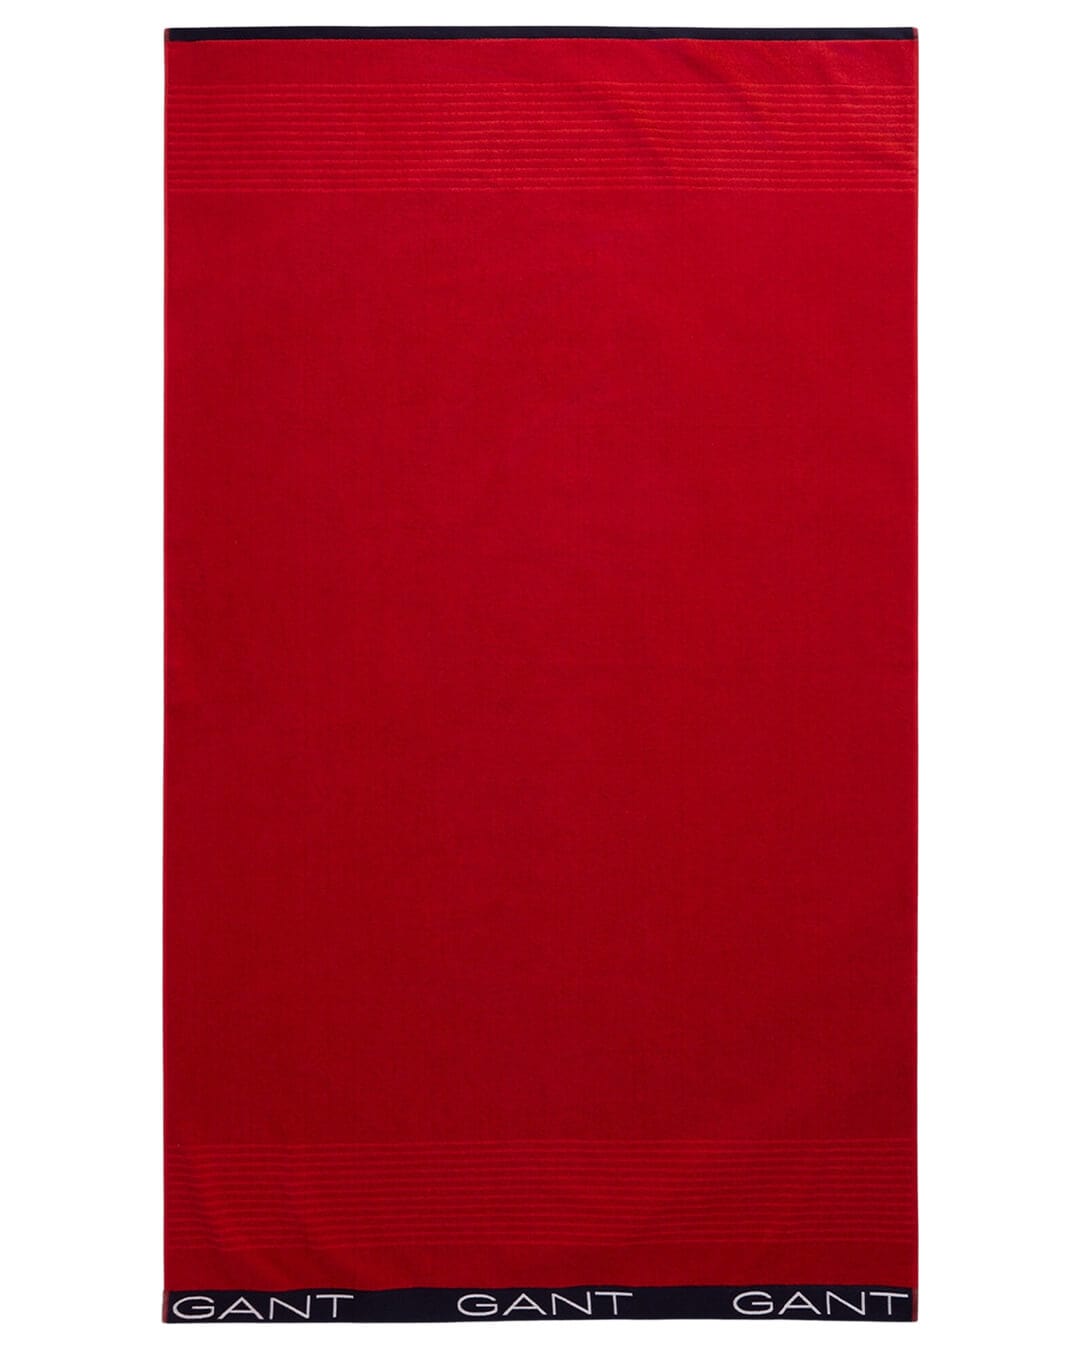 Gant Towel ONE SIZE Gant Red Tonal Stripe Beach Towel